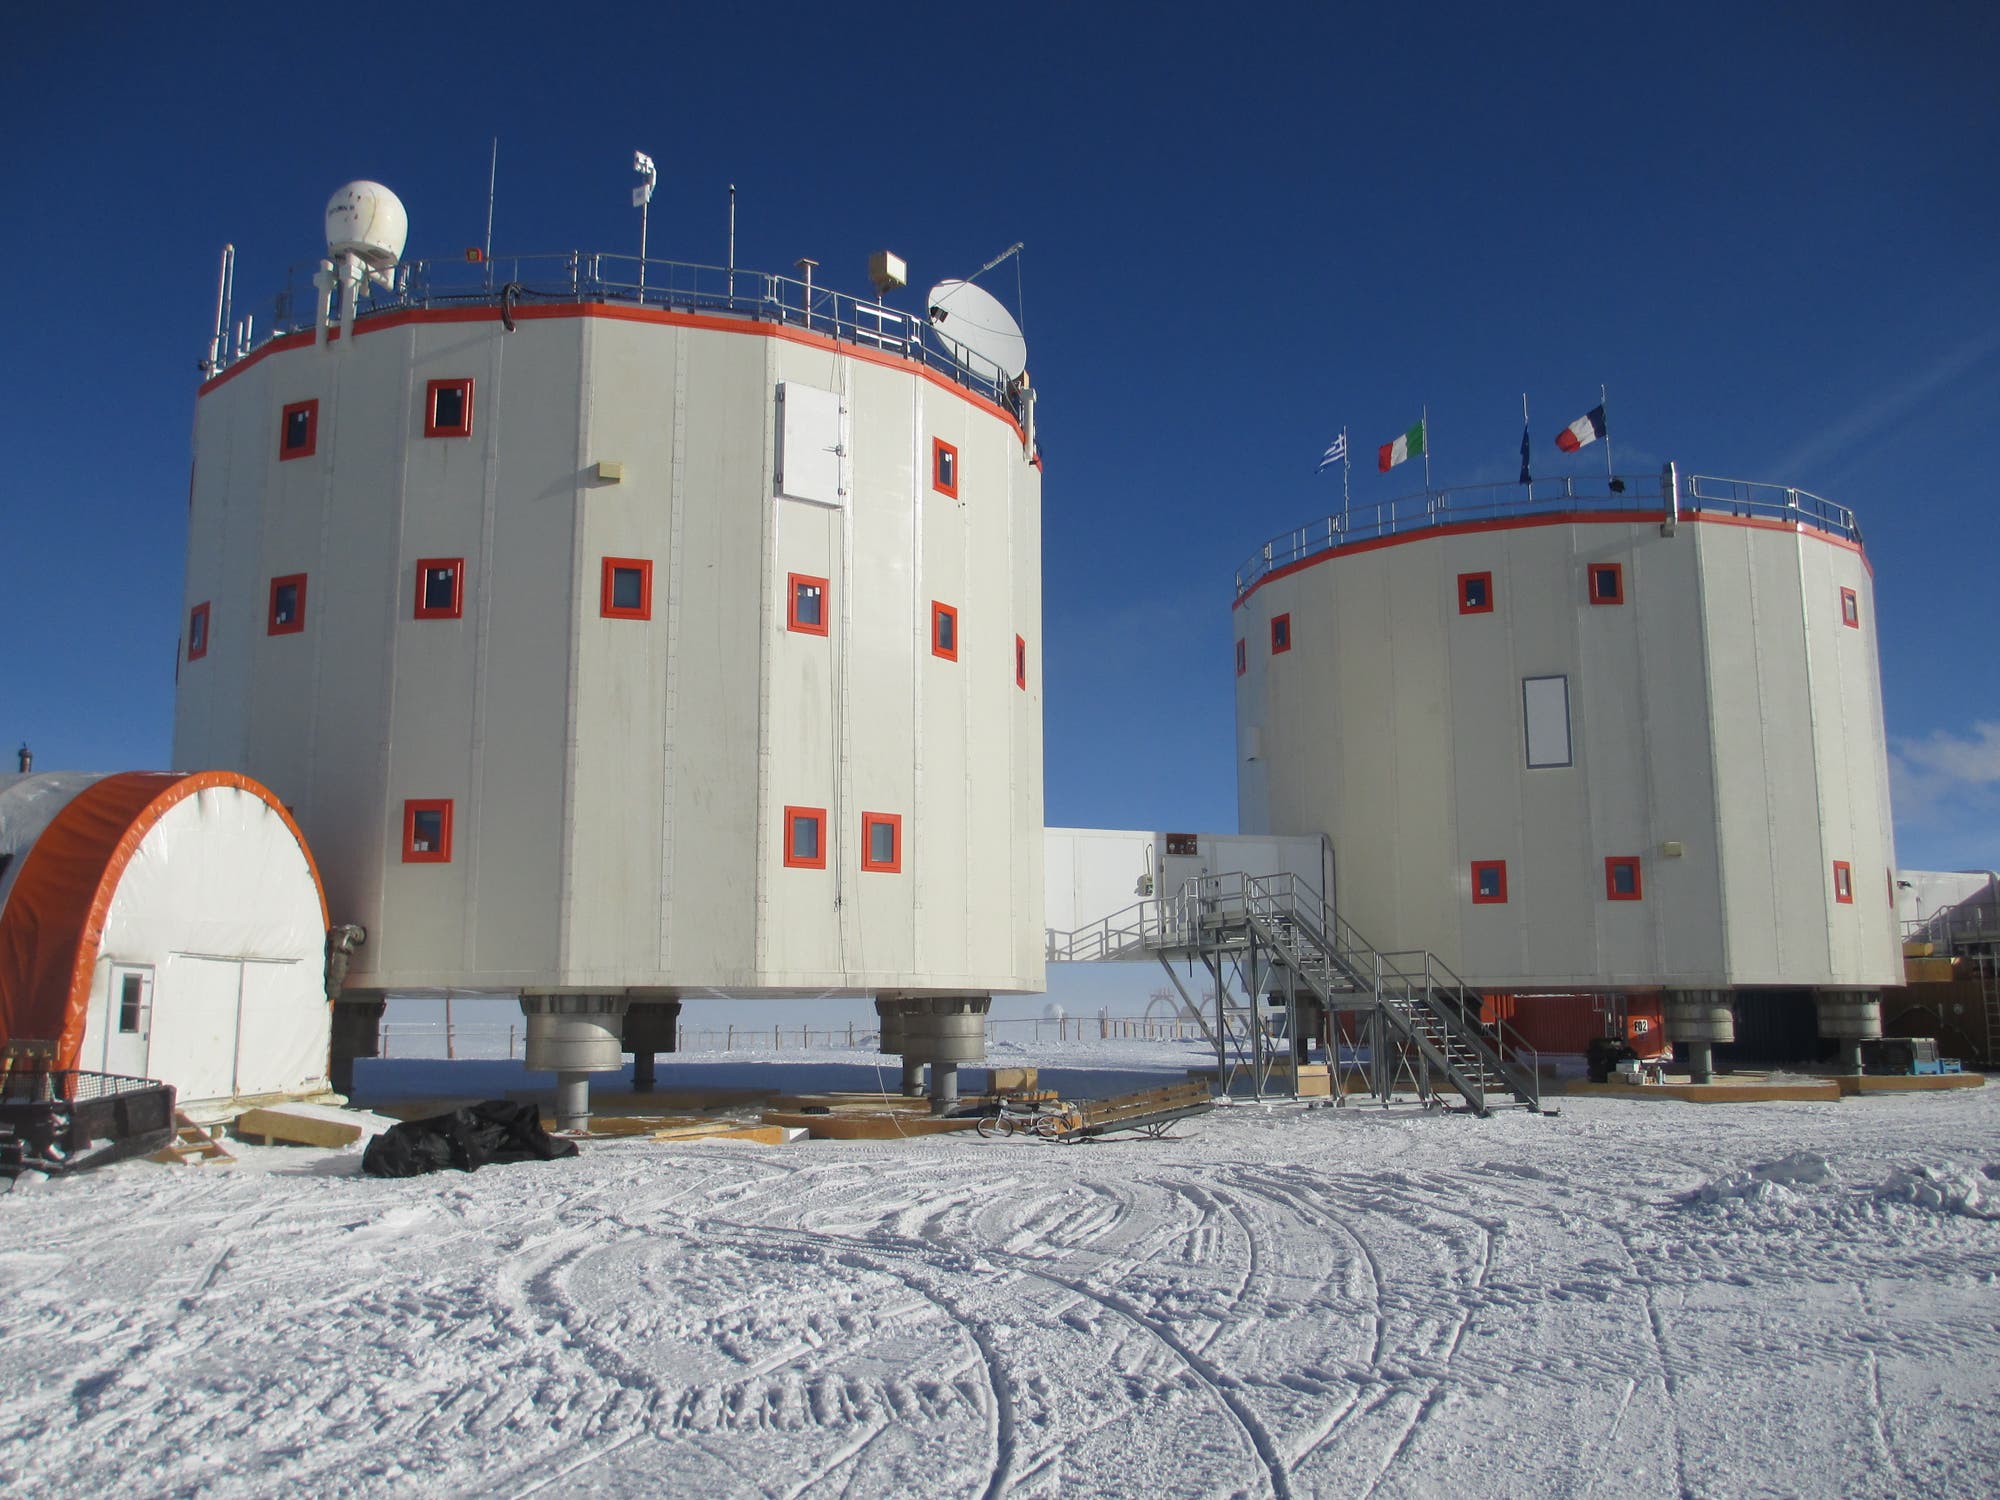 Station Dome Concordia in der Antarktis